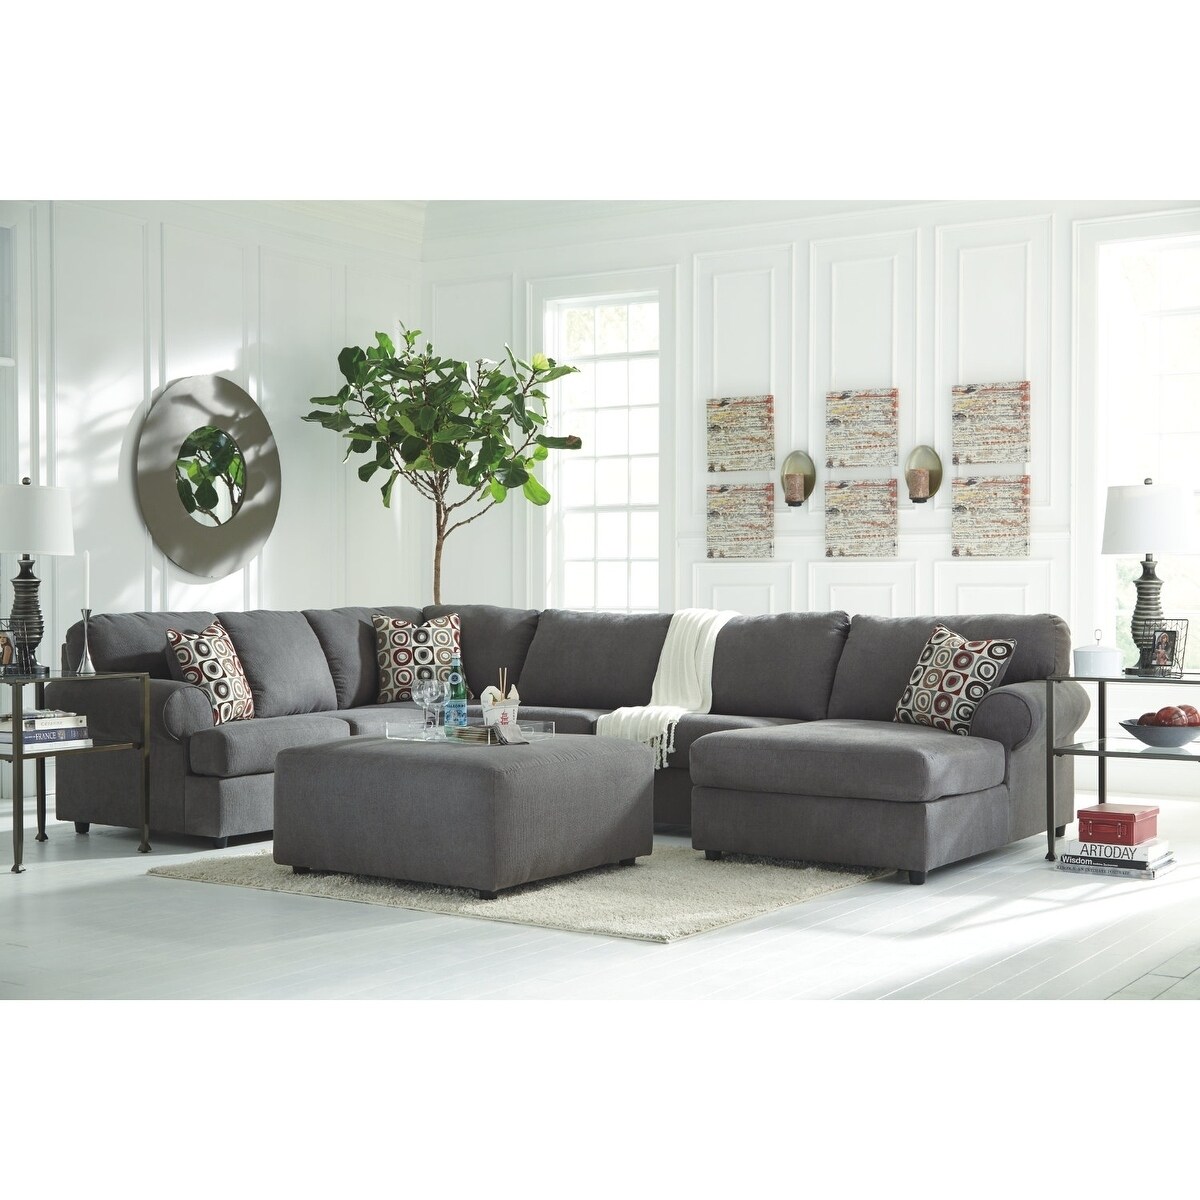 Jayceon 4-Piece Modern Sectional Sofa with Ottoman